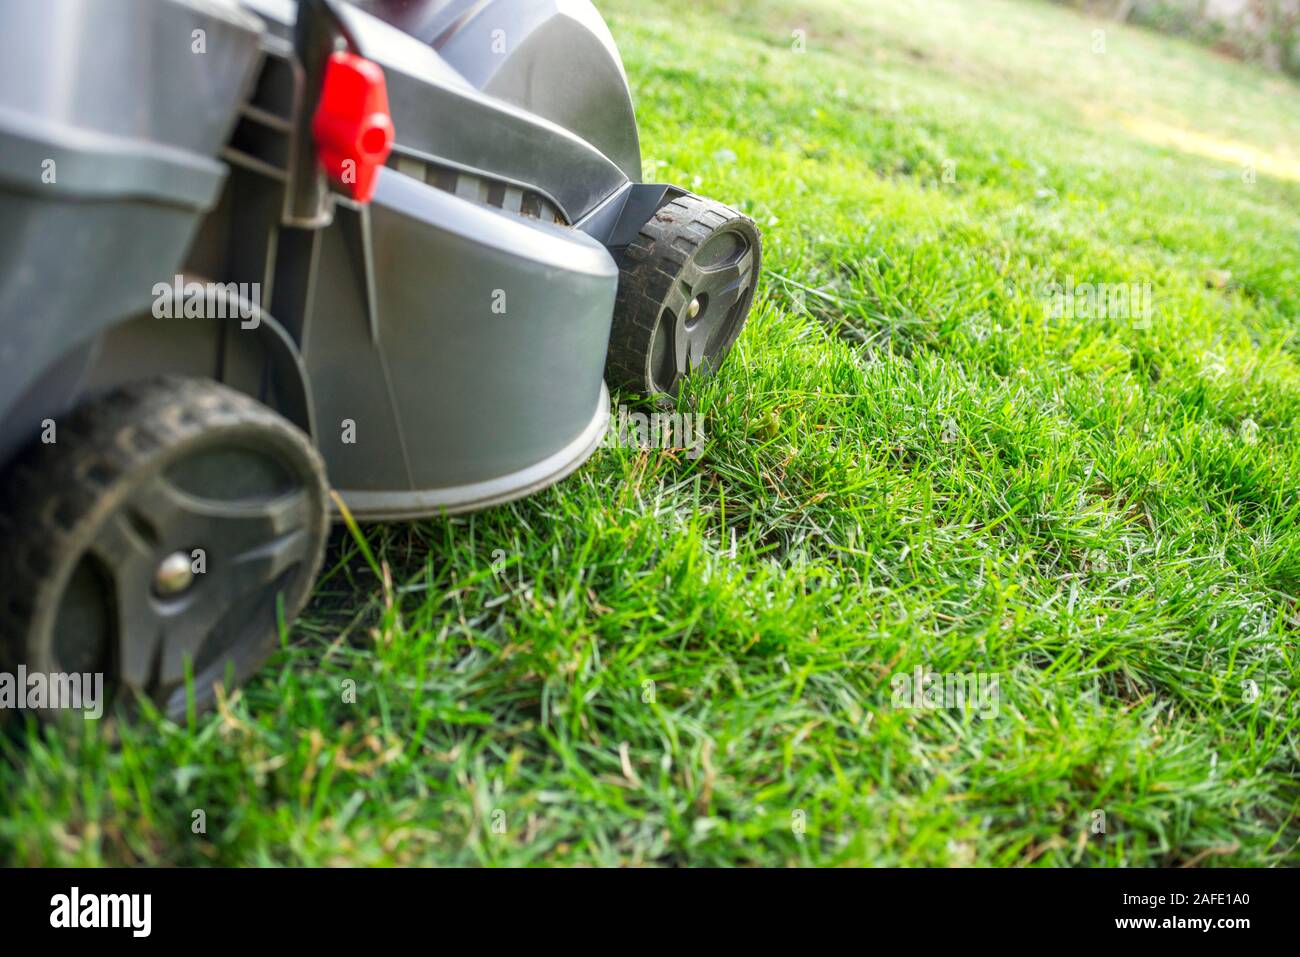 Lawn mower cutting grass. Gardening concept background. Lawn mower cutting through the grass. Stock Photo